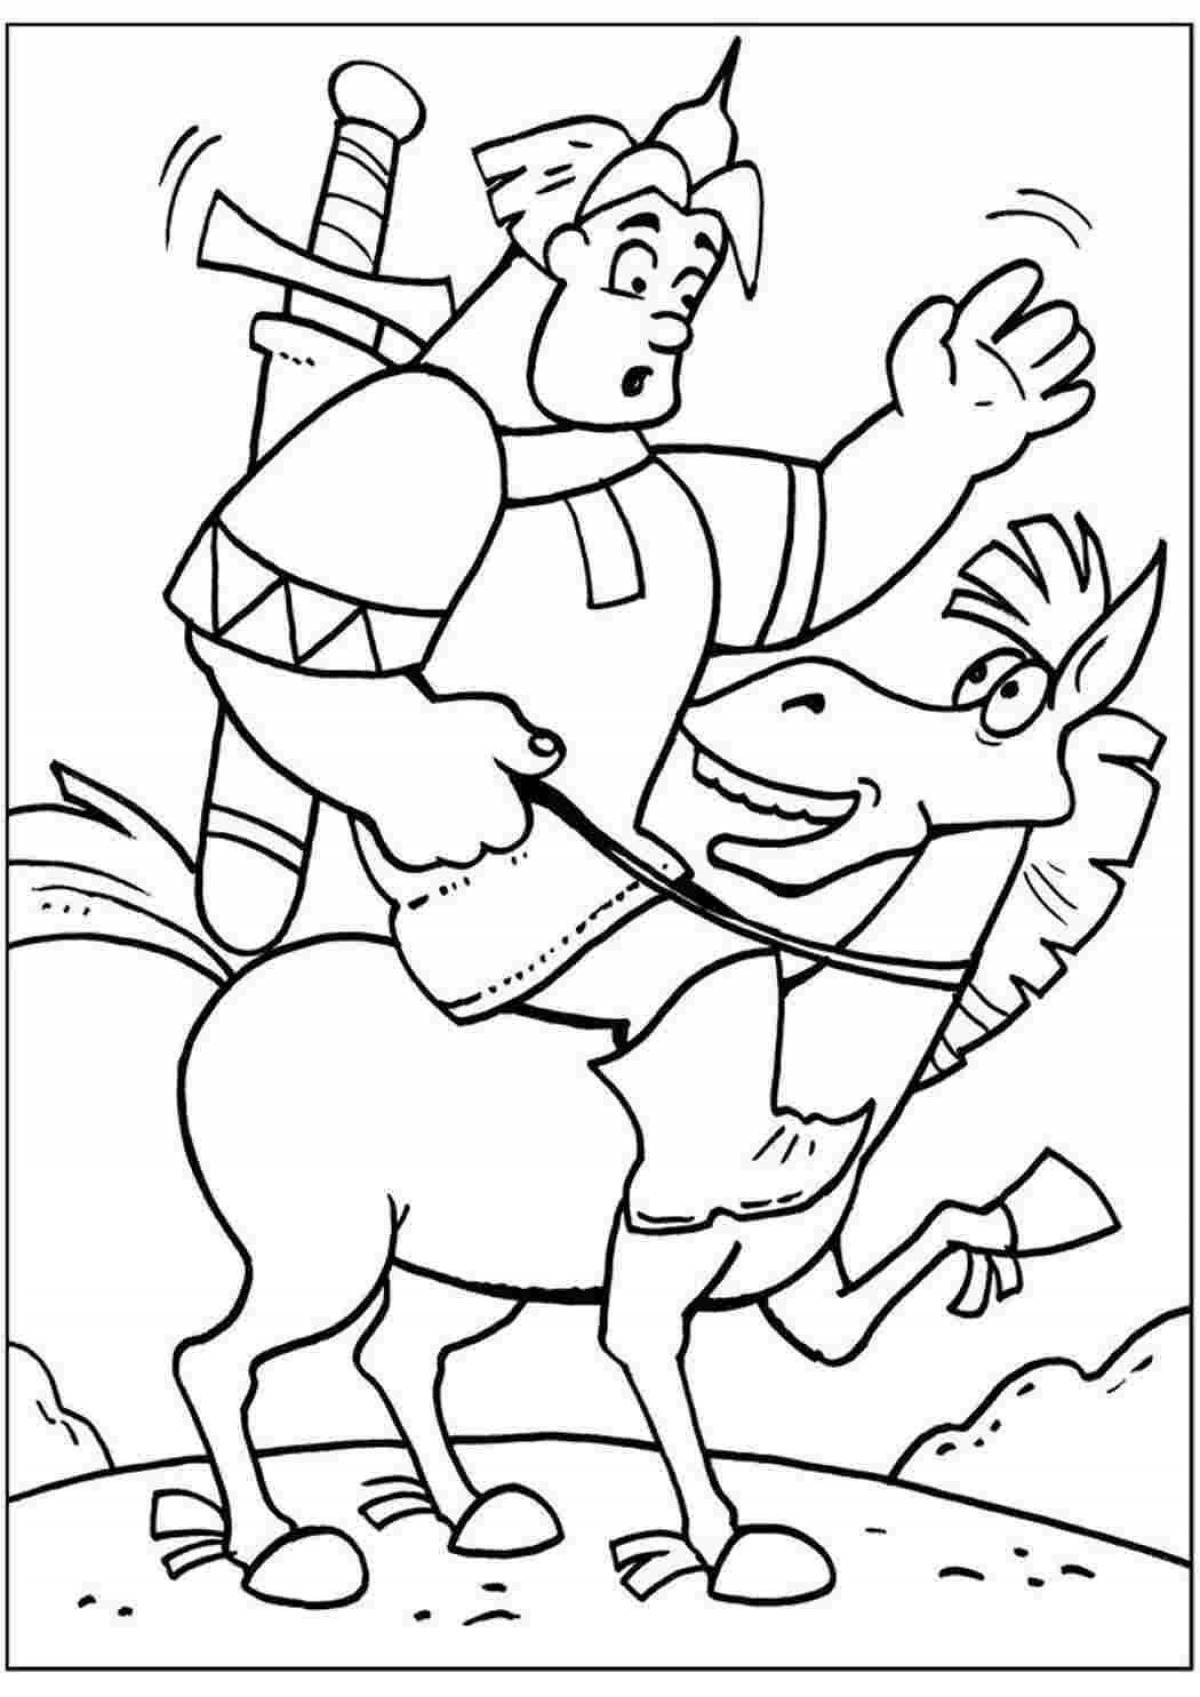 Courageous hero coloring book on horseback